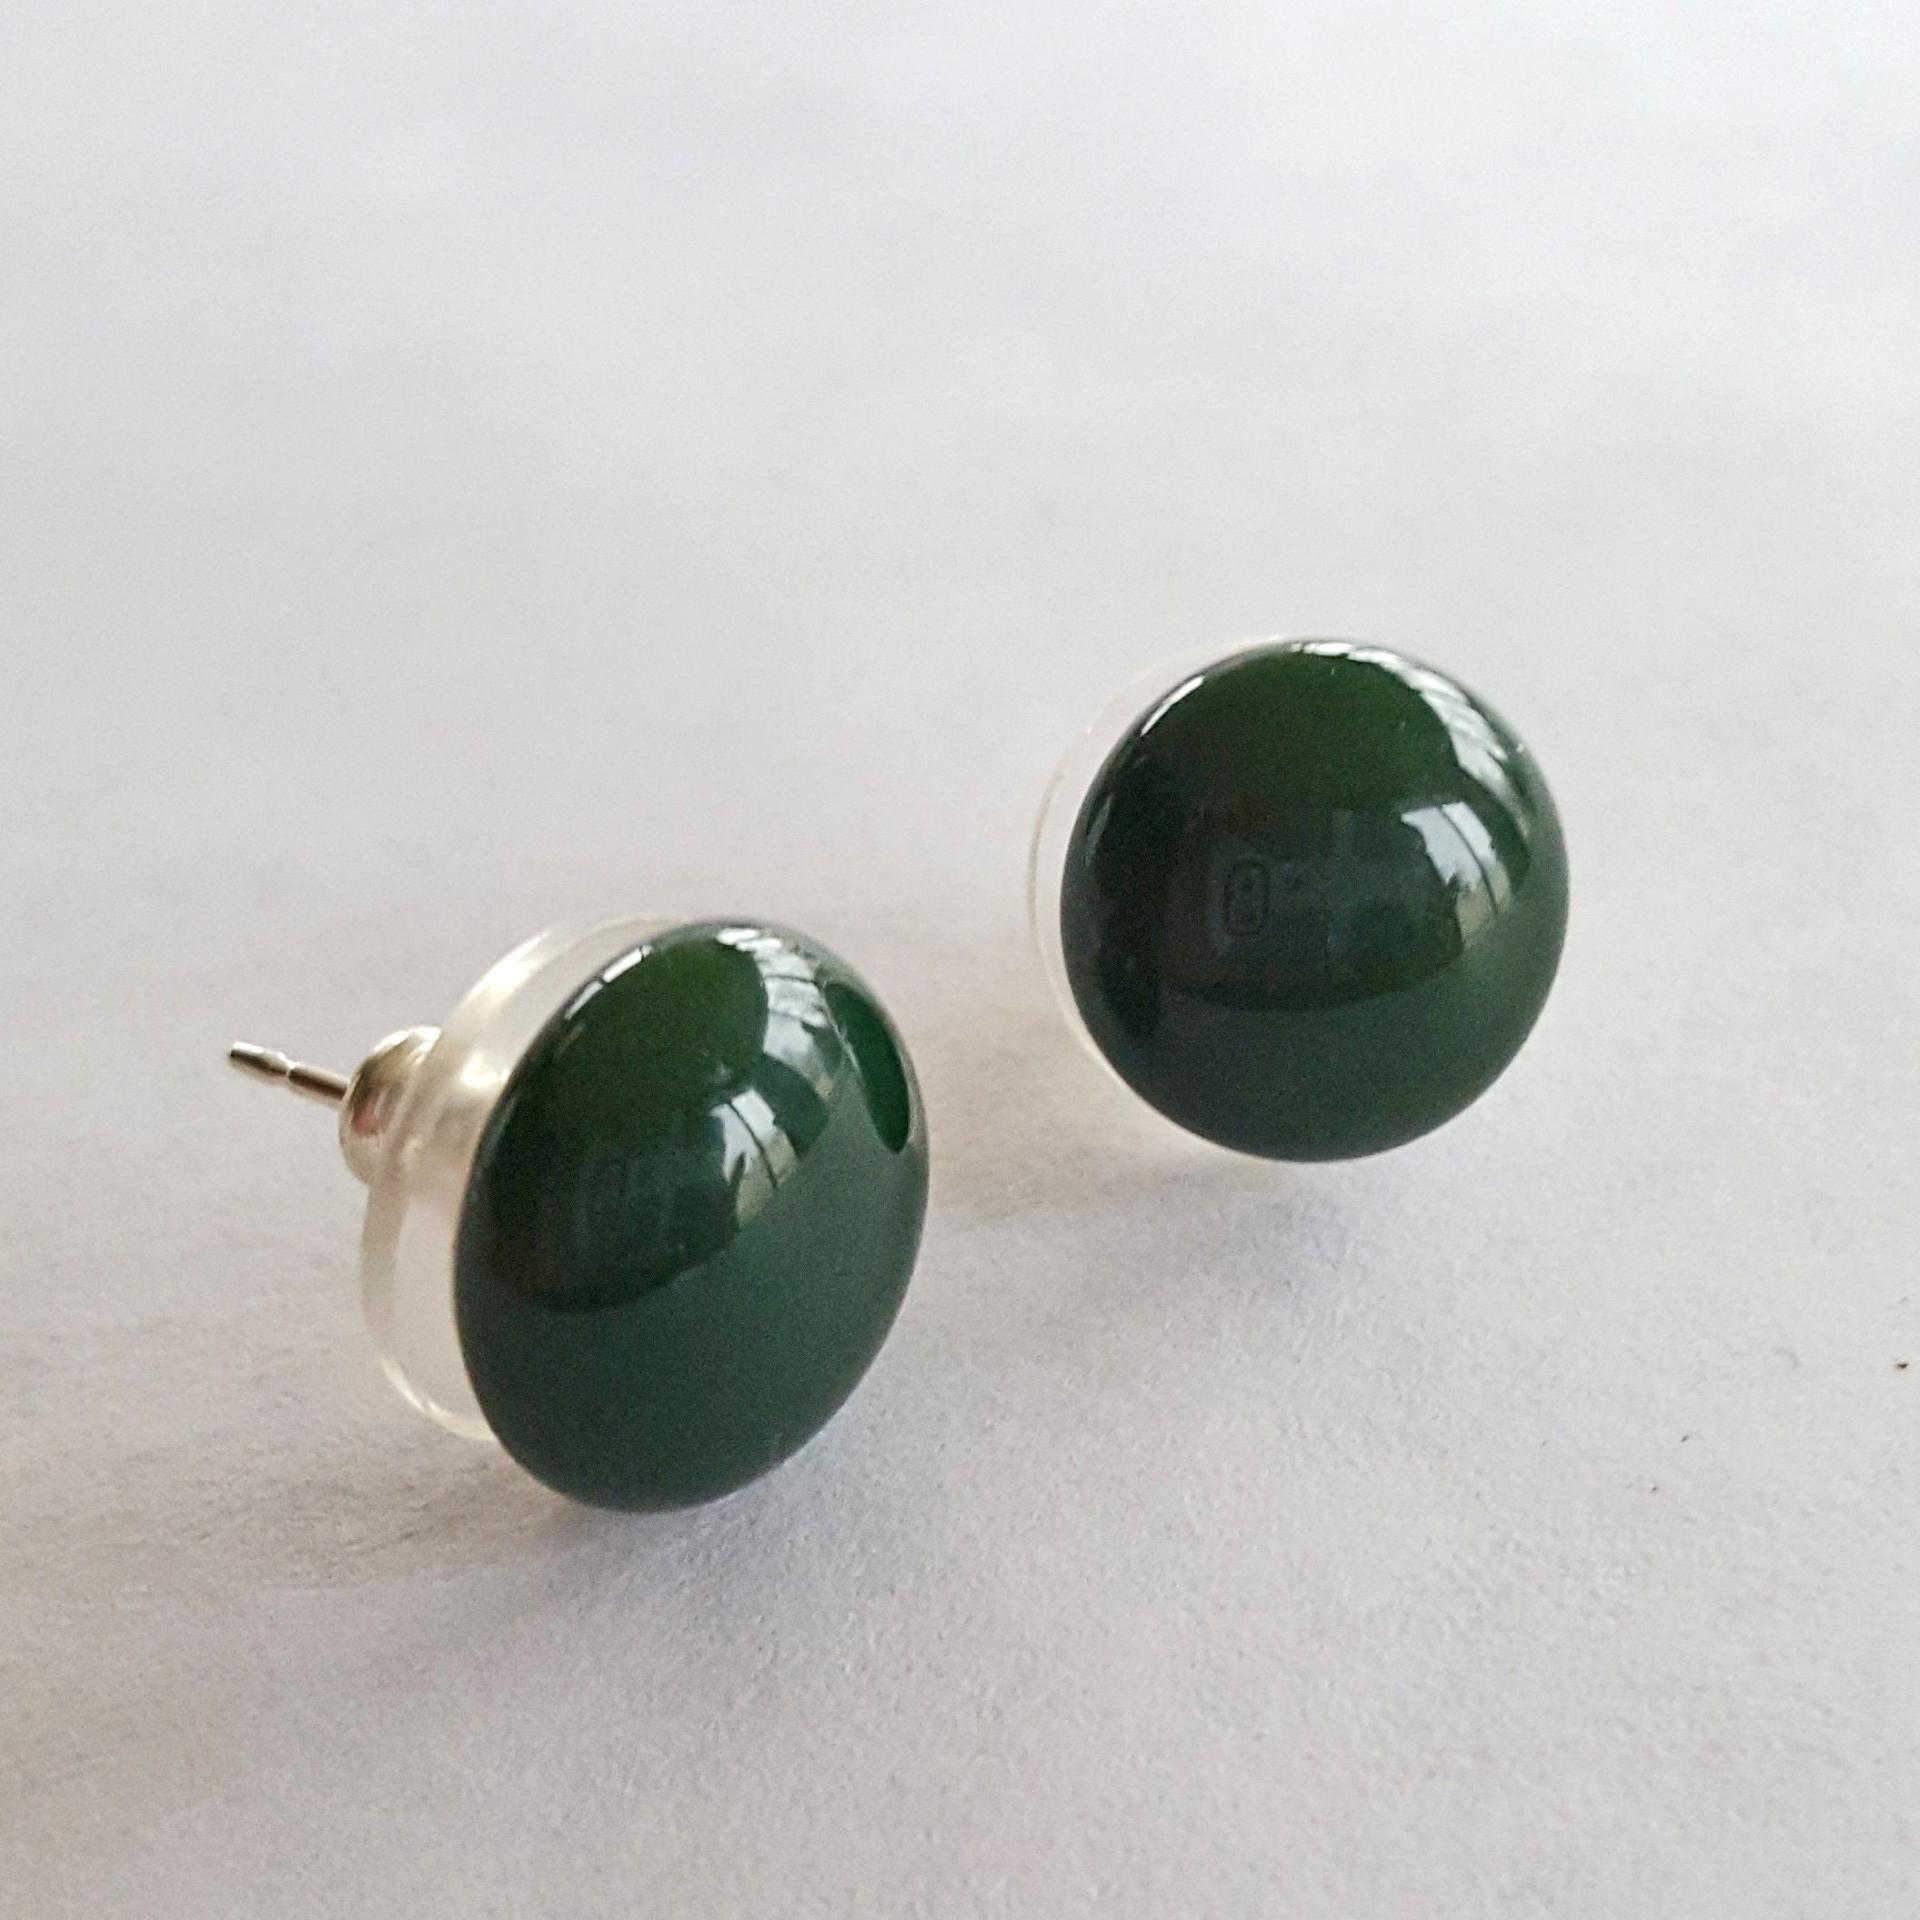 Green Stud Earrings, Fused Glass, Sterling Silver Posts